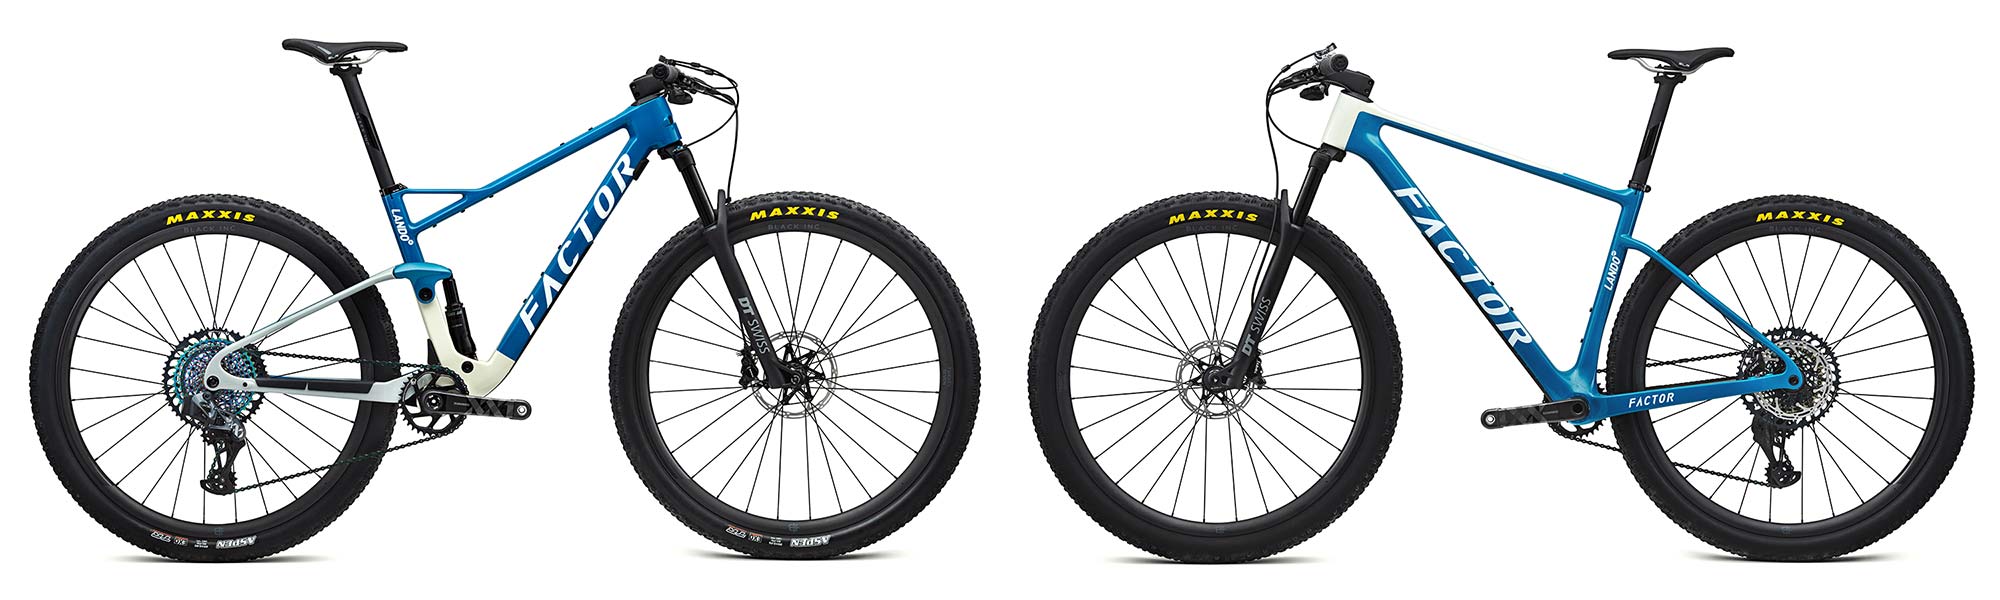 Factor Lando XC all-new carbon mountain bikes, hardtail or full-suspension